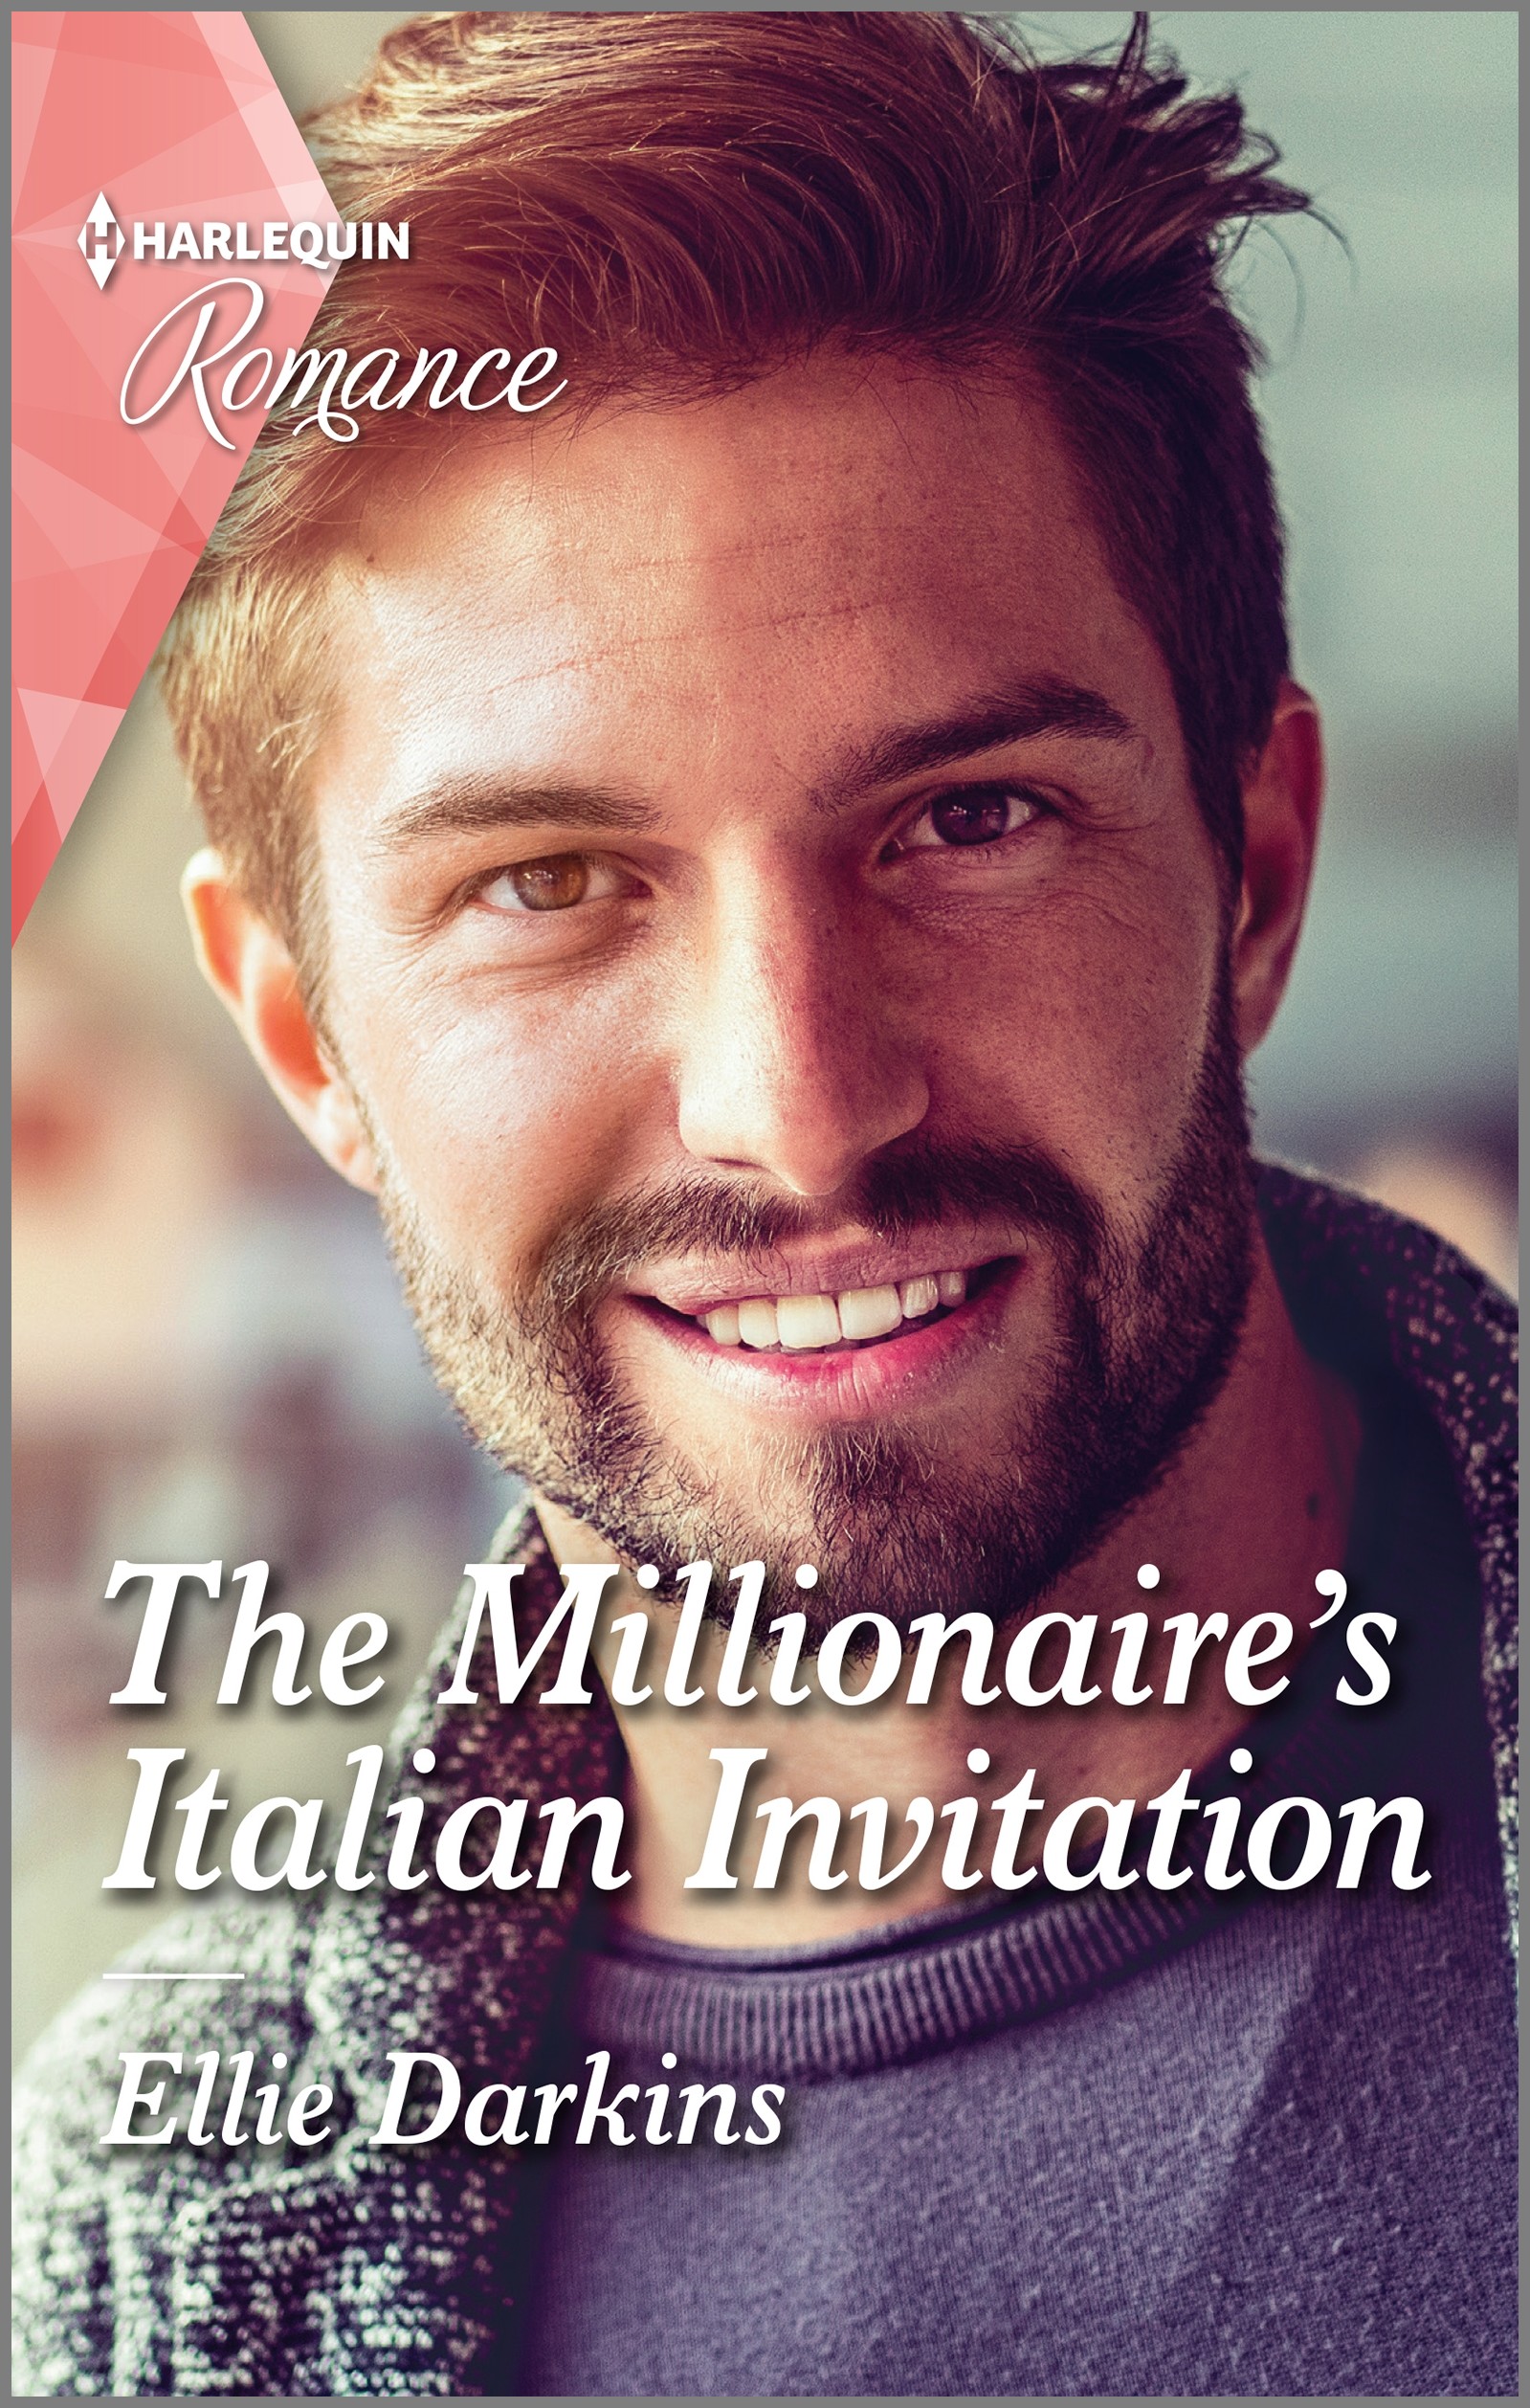 THE MILLIONAIRE'S ITALIAN INVITATION by Ellie Darkins